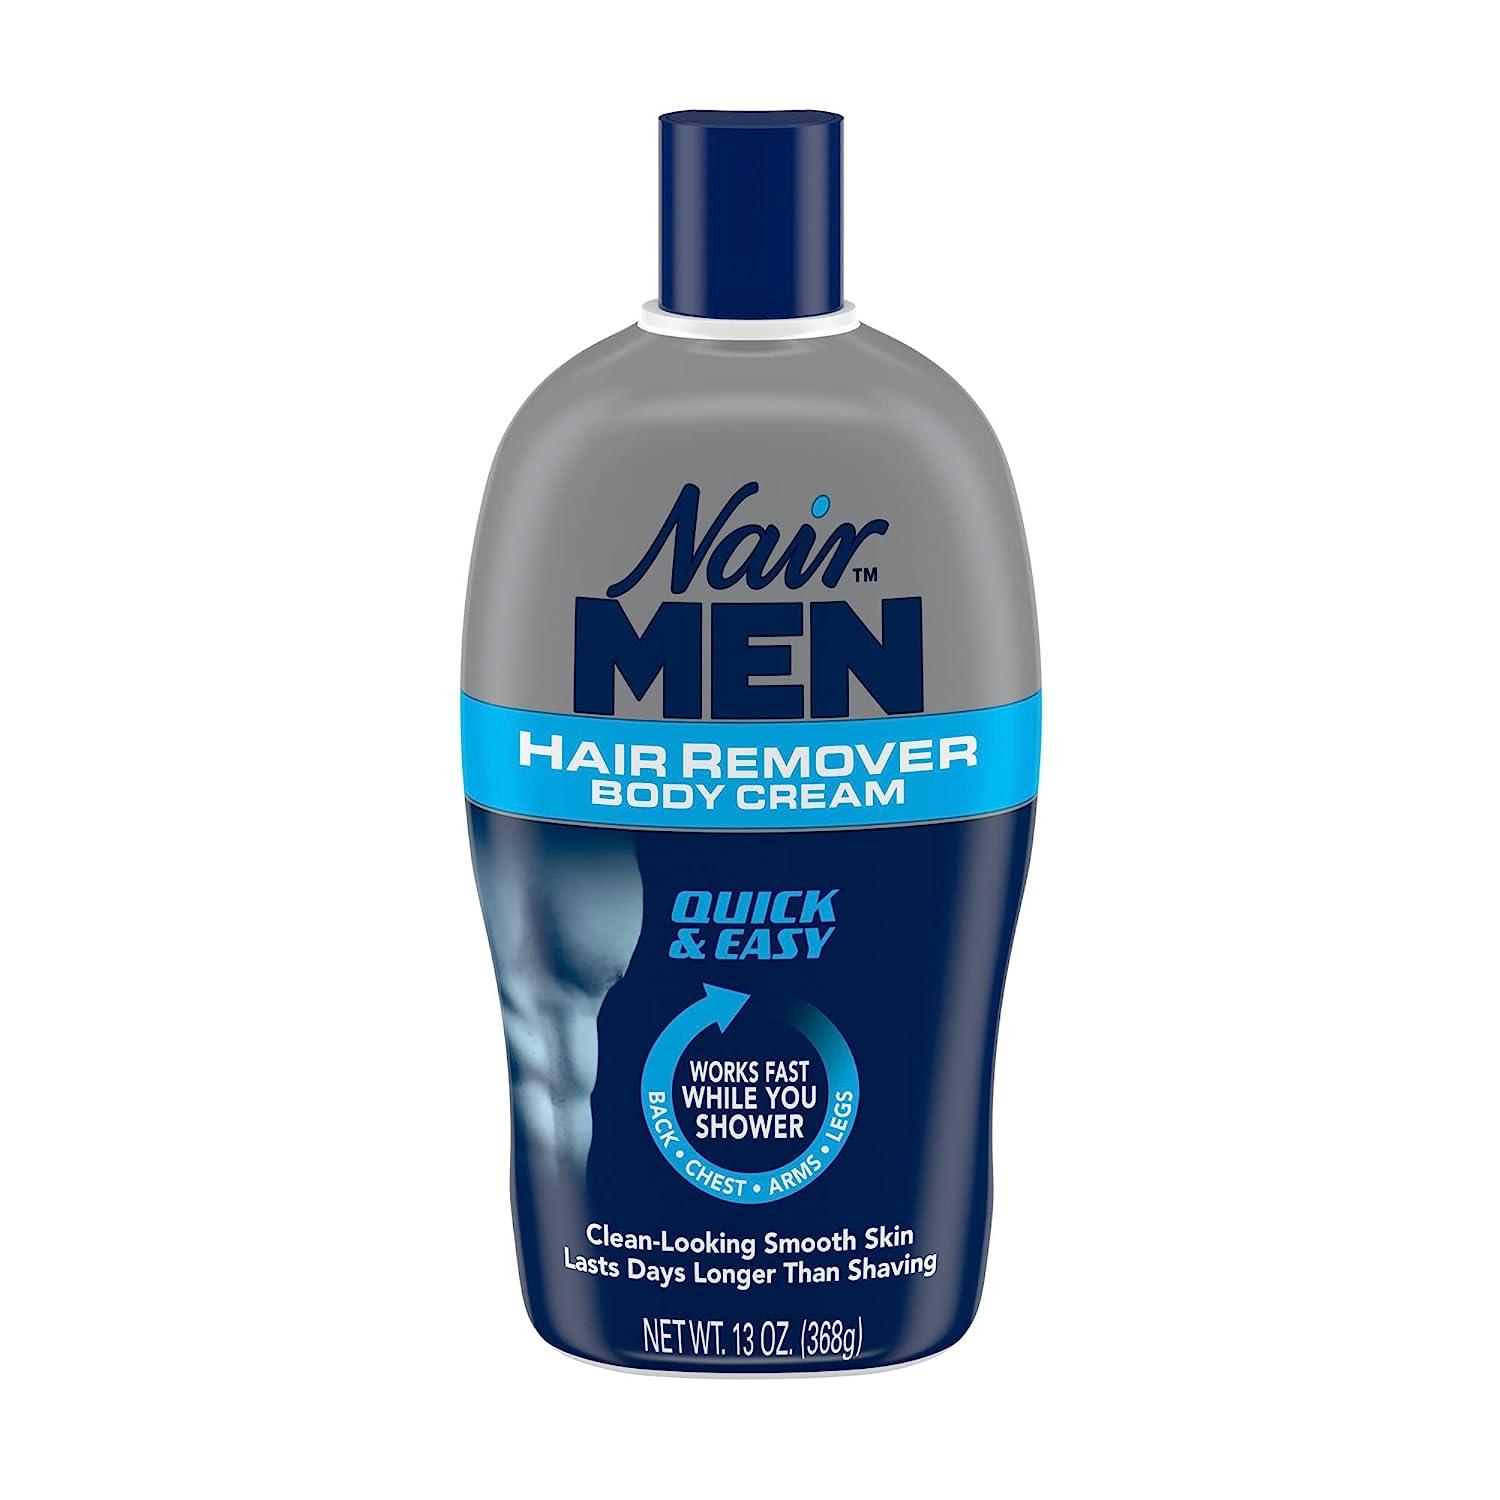 Nair for Men - Hair Remover Body Cream 13 oz (368g) - CheapLubes.com